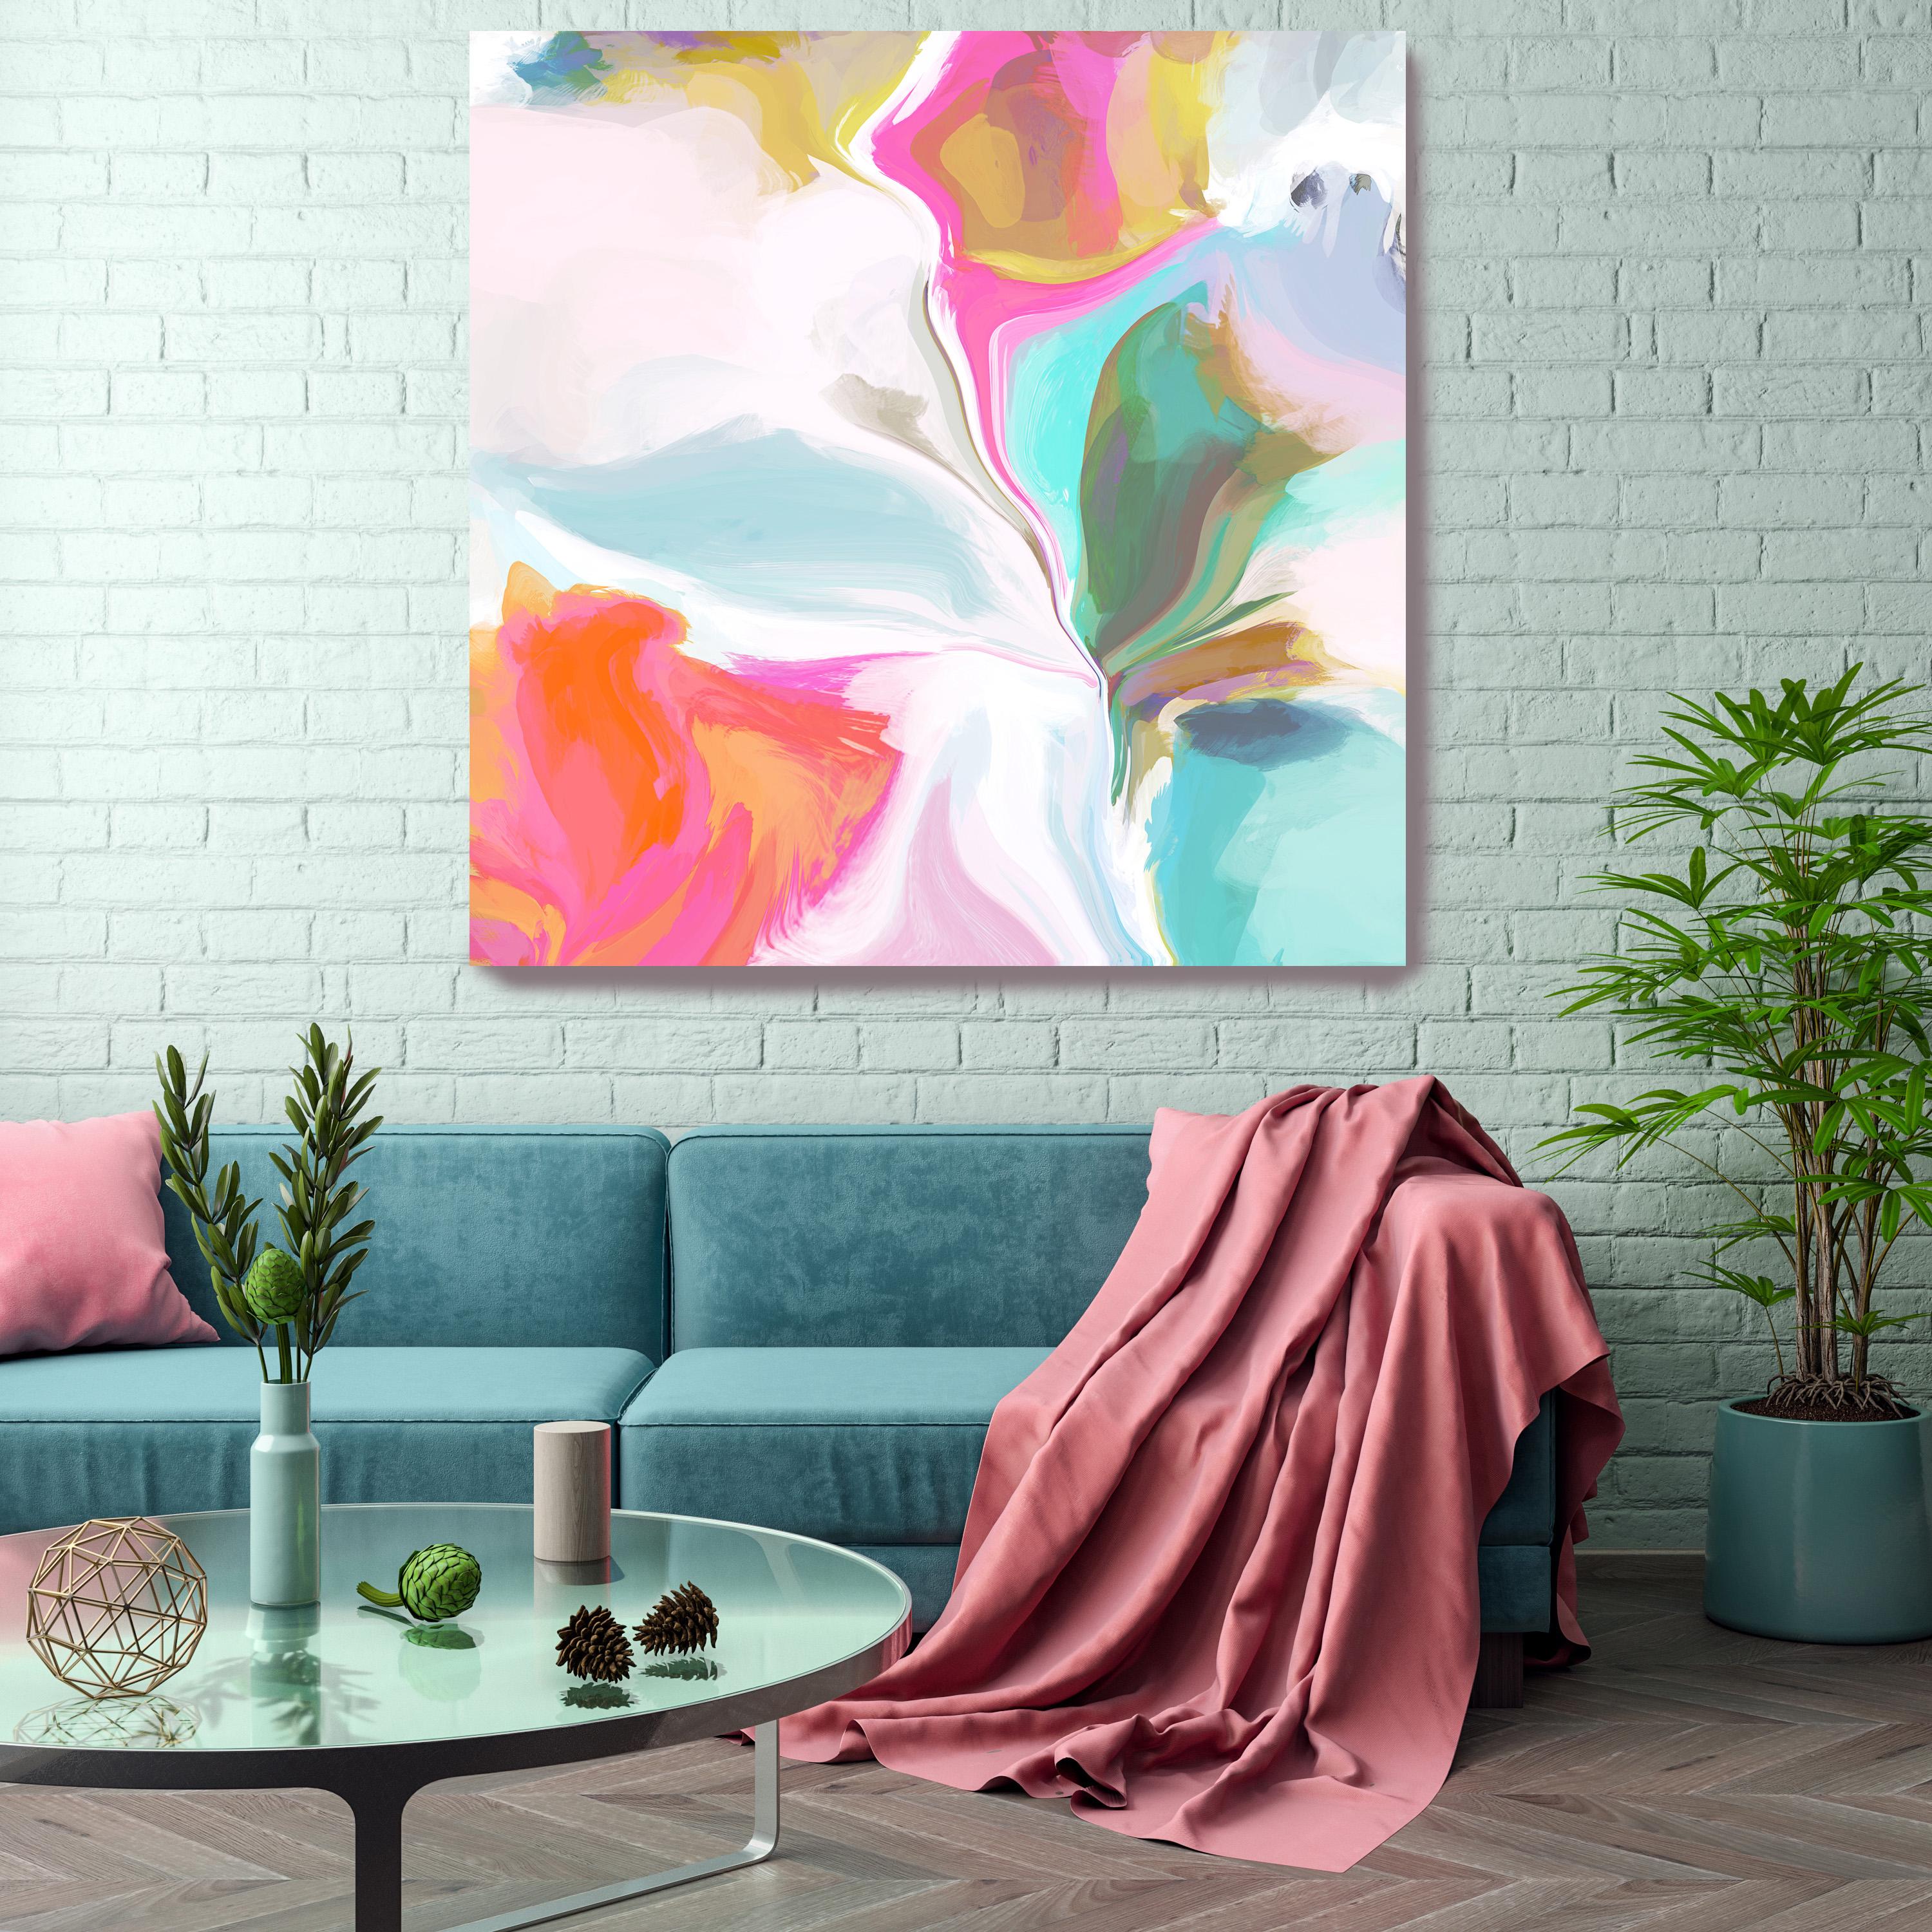 Irena Orlov Interior Painting - Orange Aqua Abstract Mixed Media on Canvas Art 48x48" Abstract #2